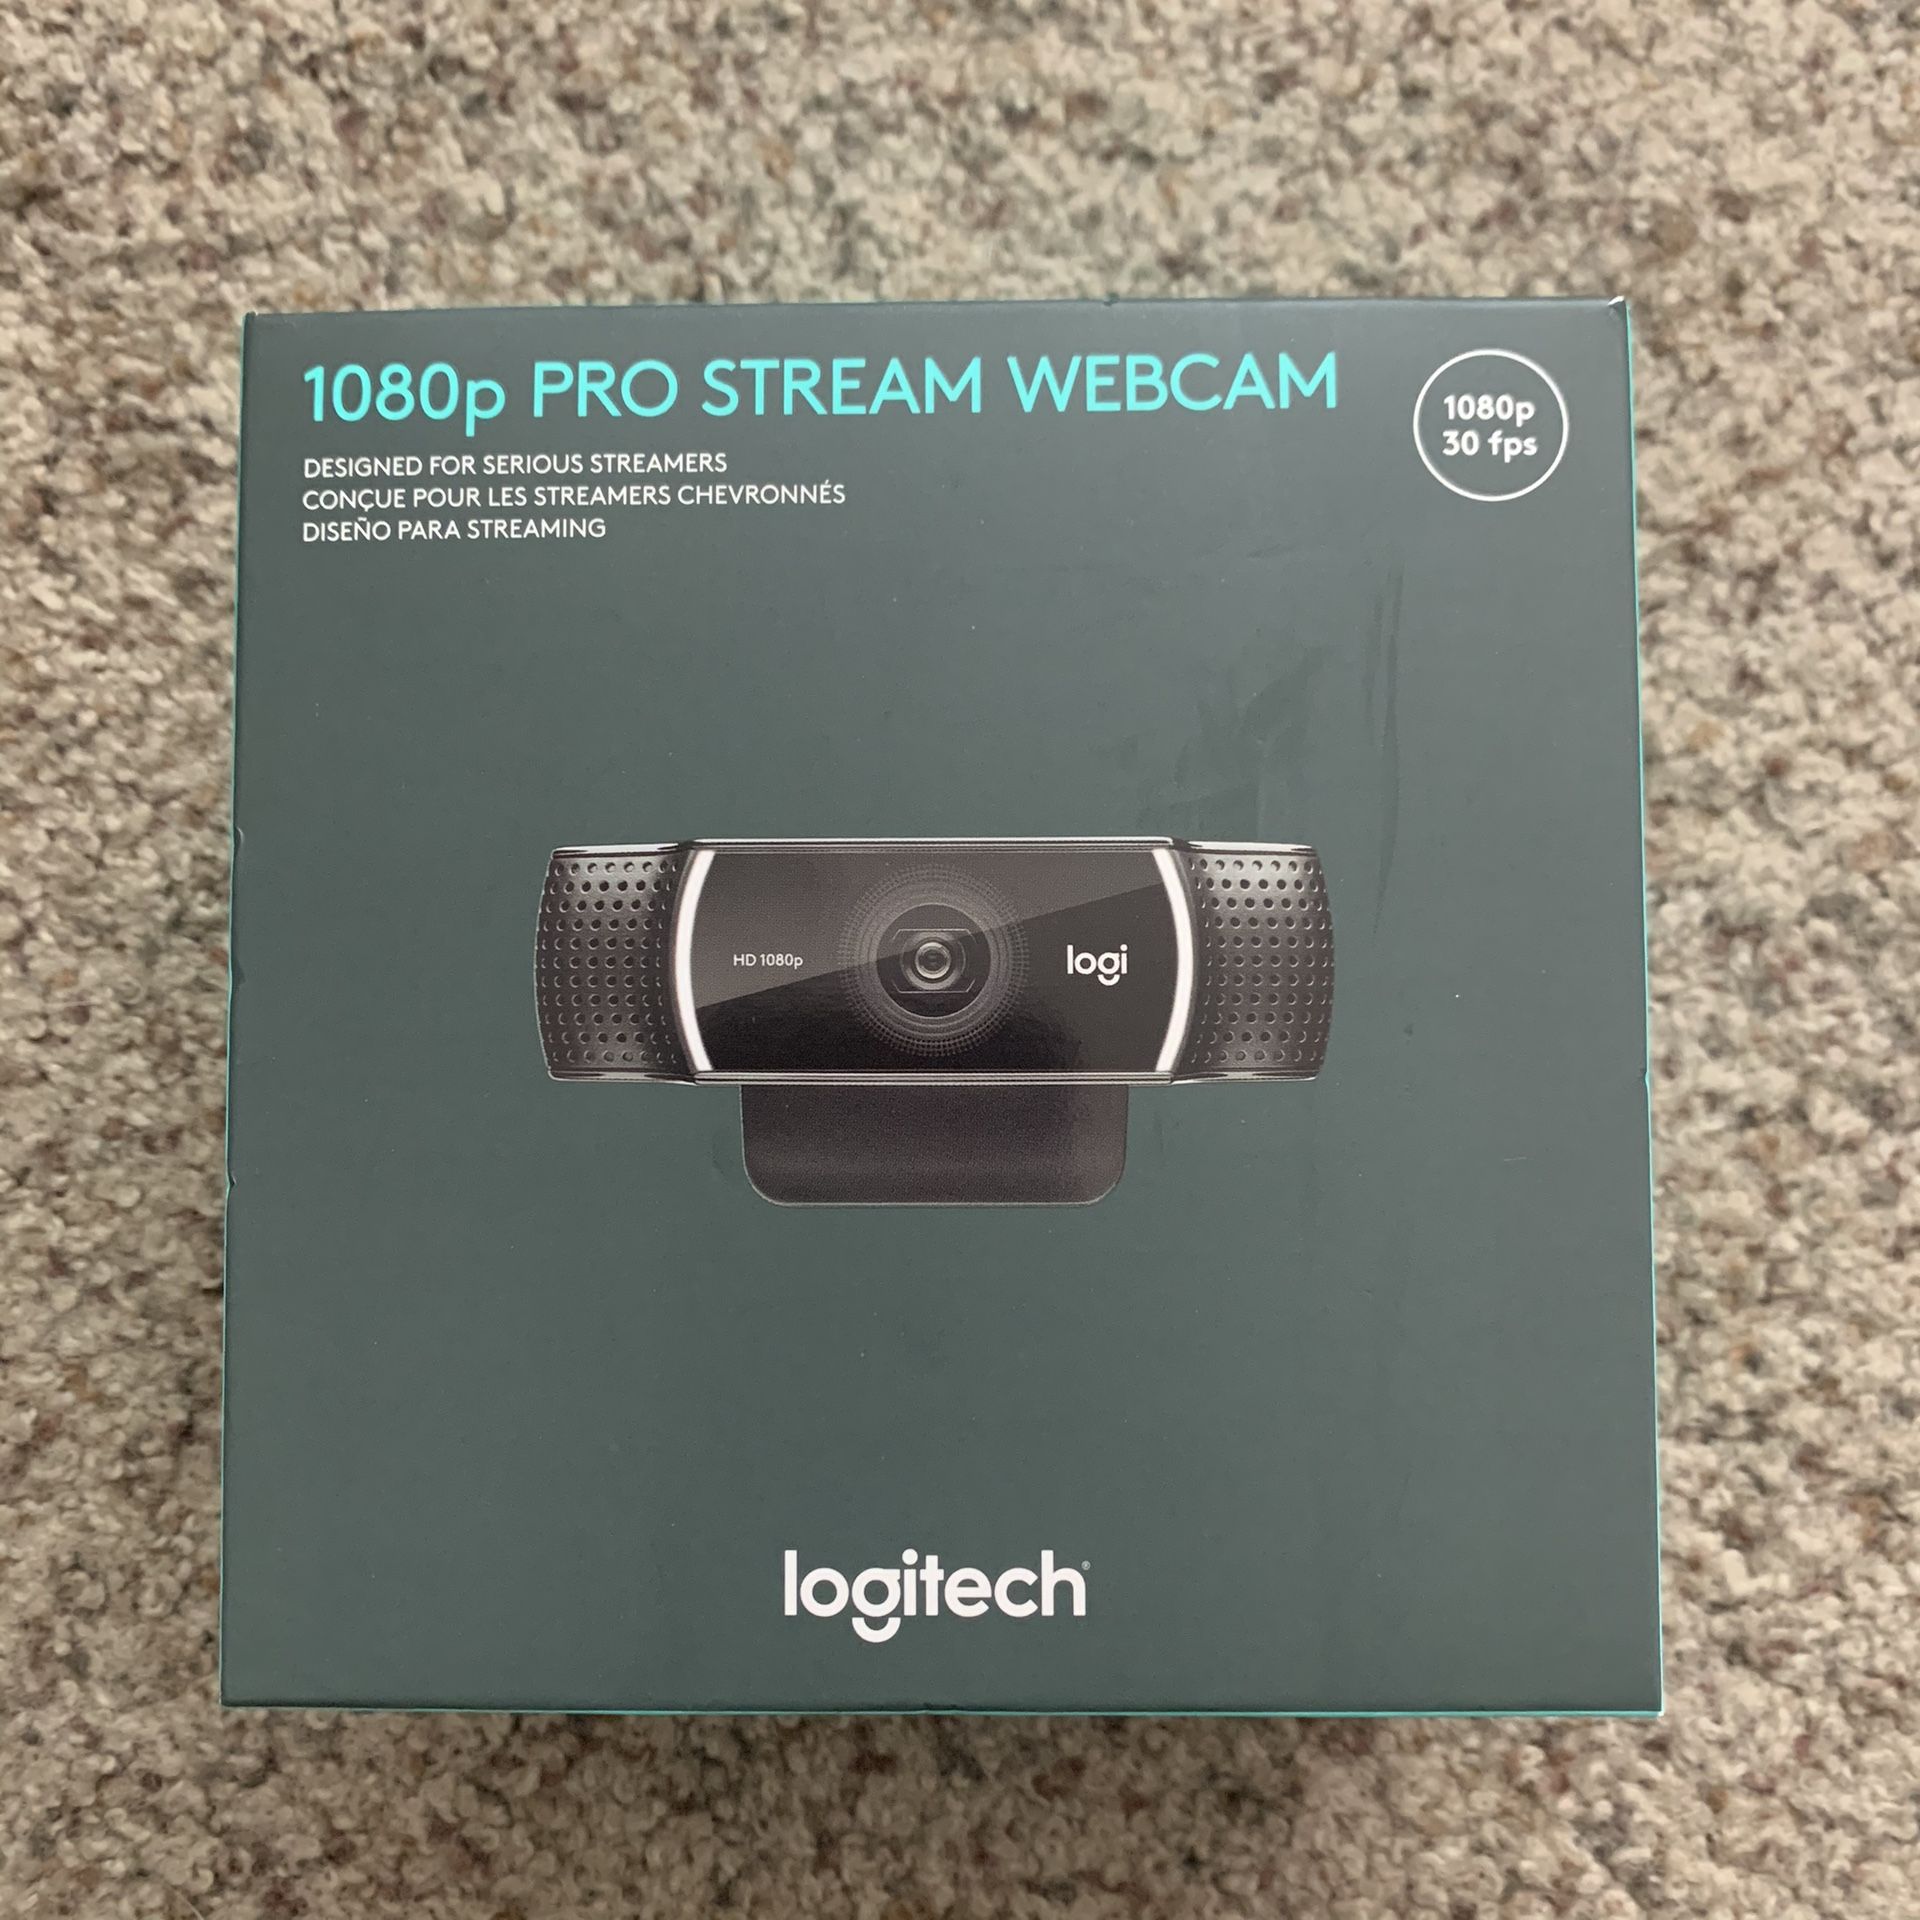 Logitech 1080p Pro Stream Webcam 30 fps